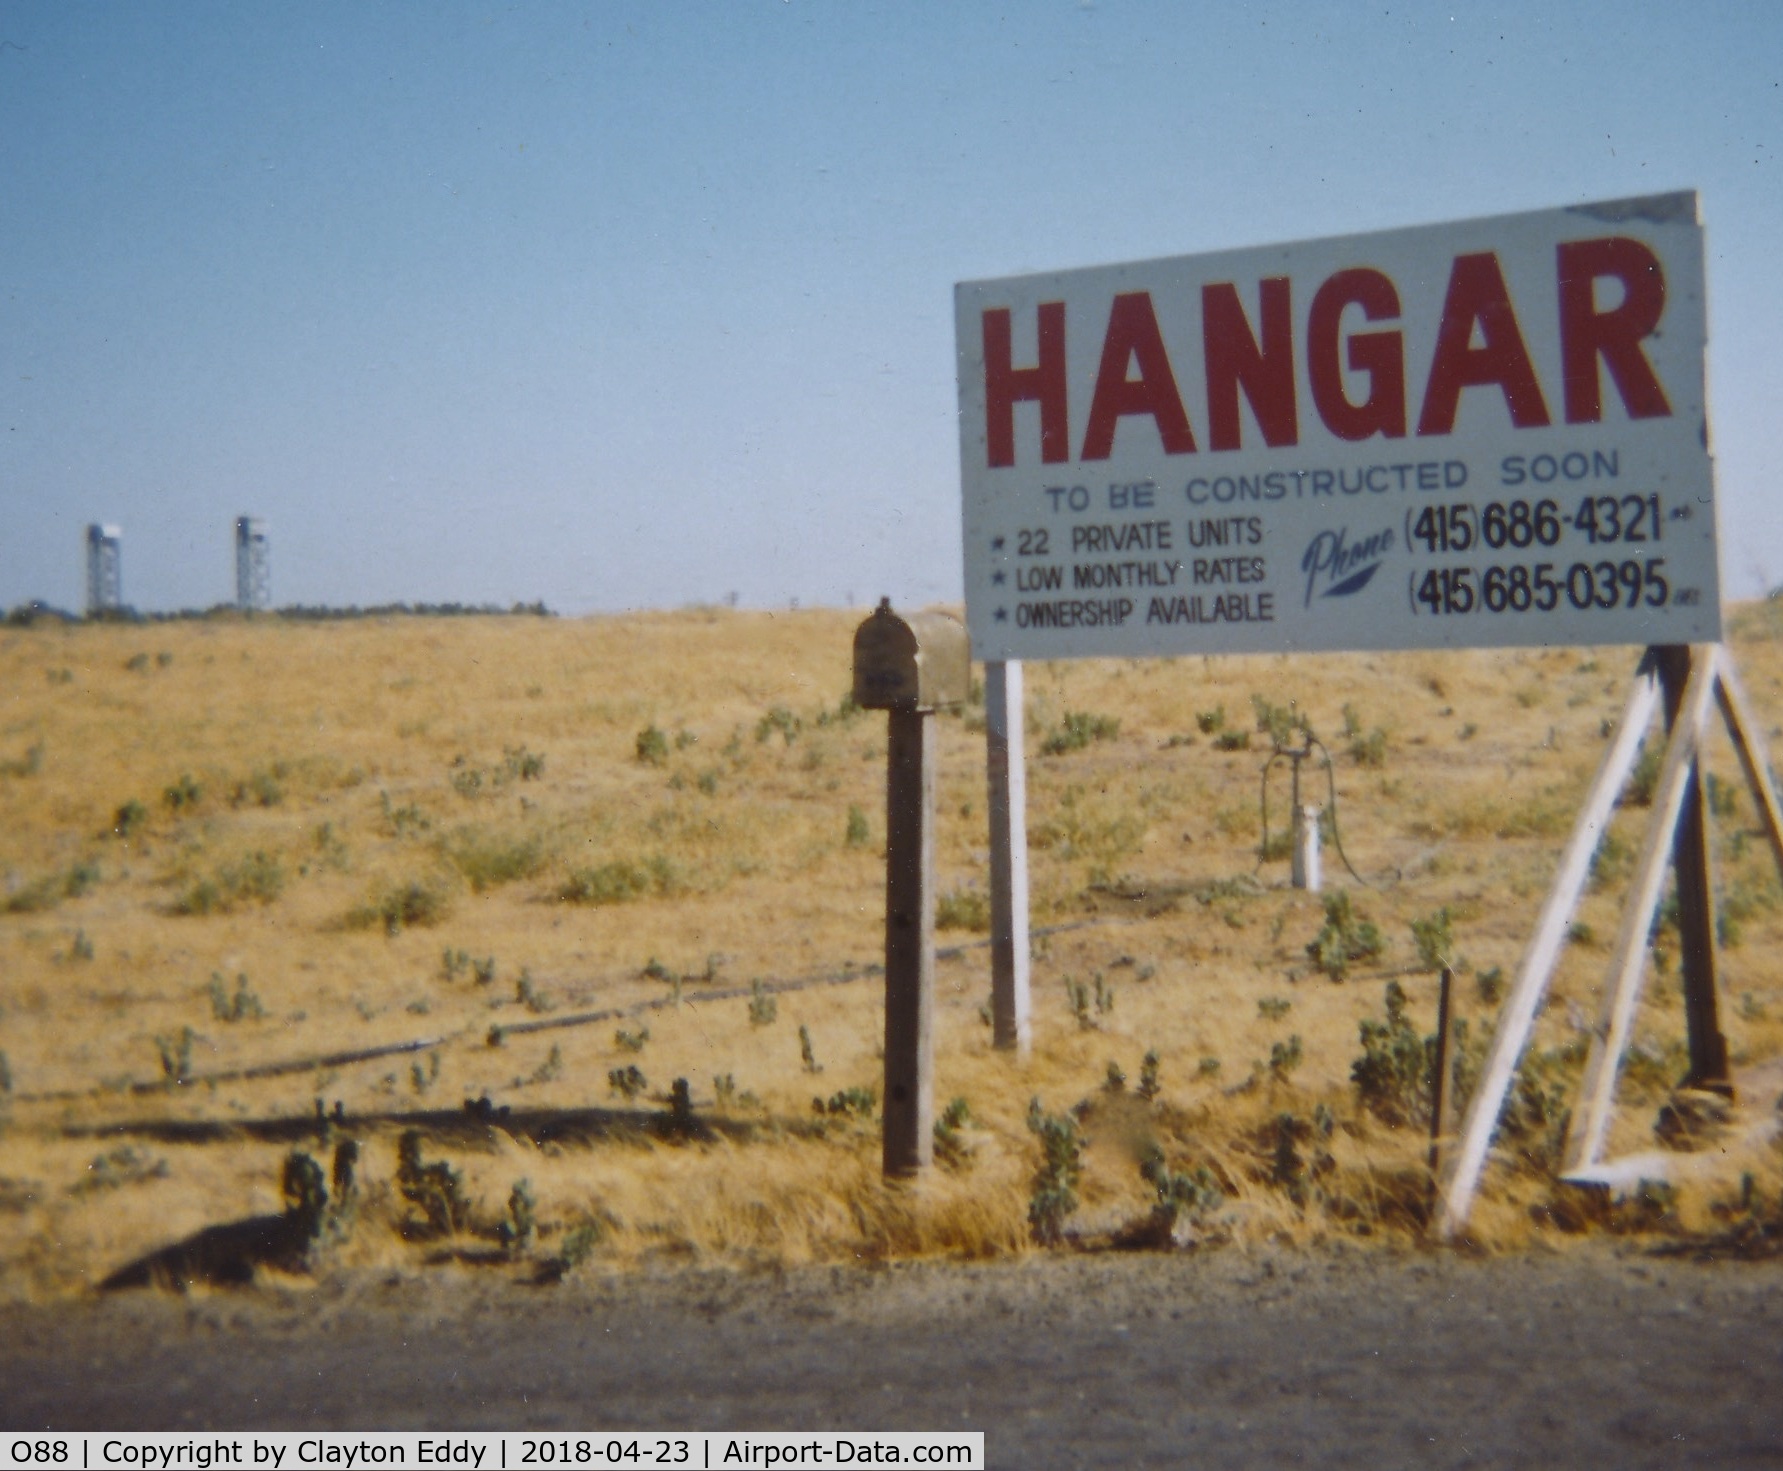 Rio Vista Municipal Airport (O88) - Sign for the new hangars at the old Rio Vista Airport California. June 1976.